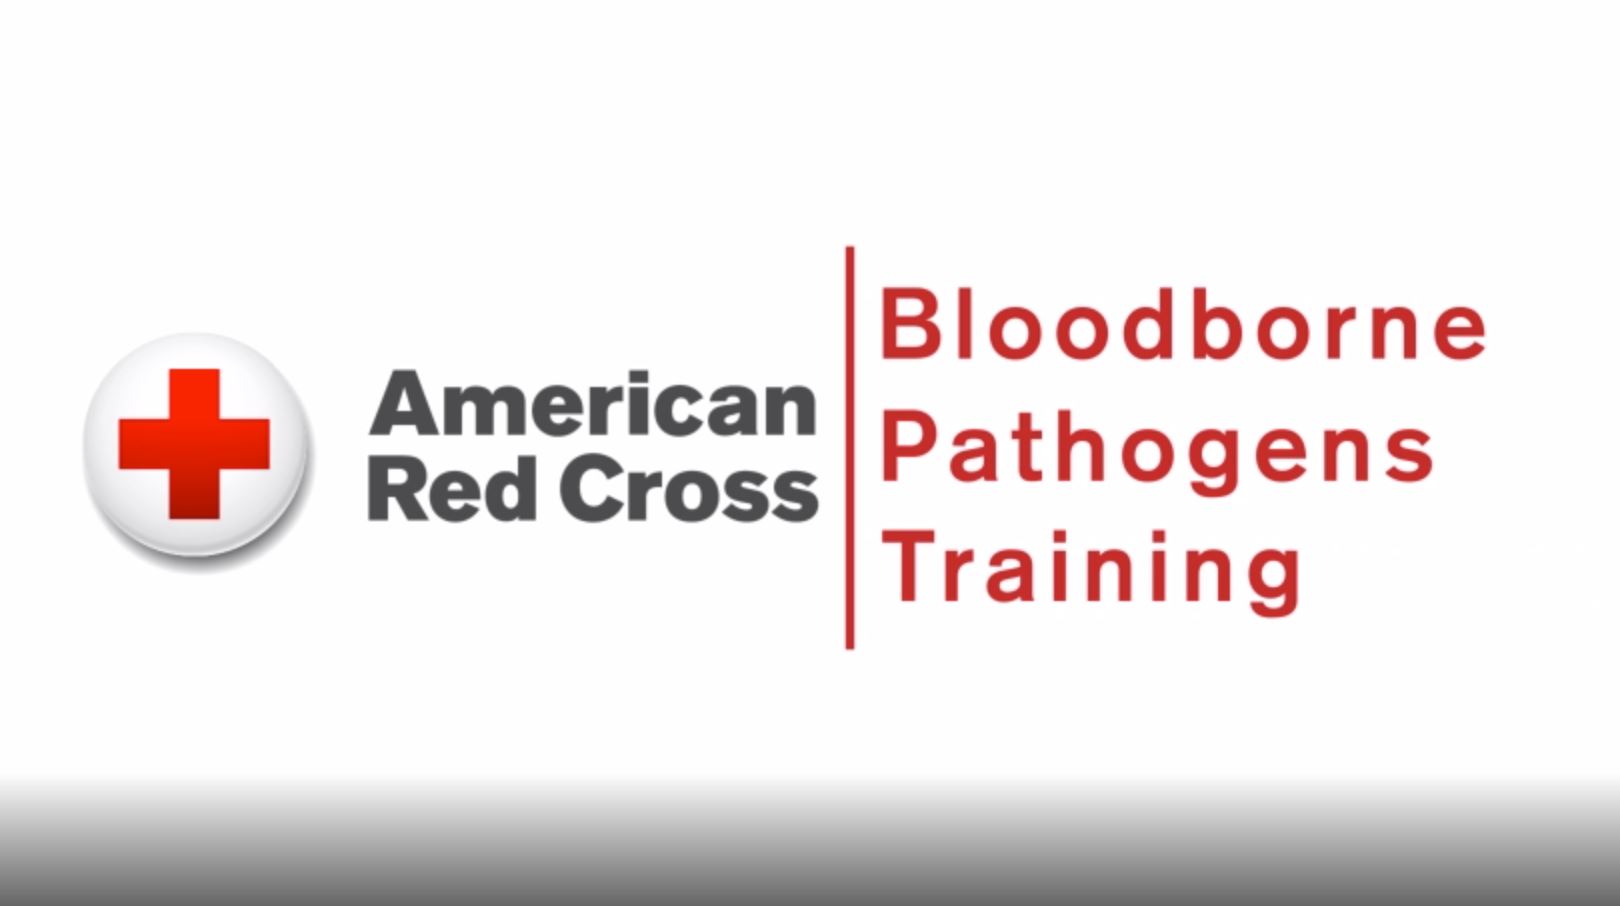 American Red Cross Bloodborne Pathogens Online Training Course